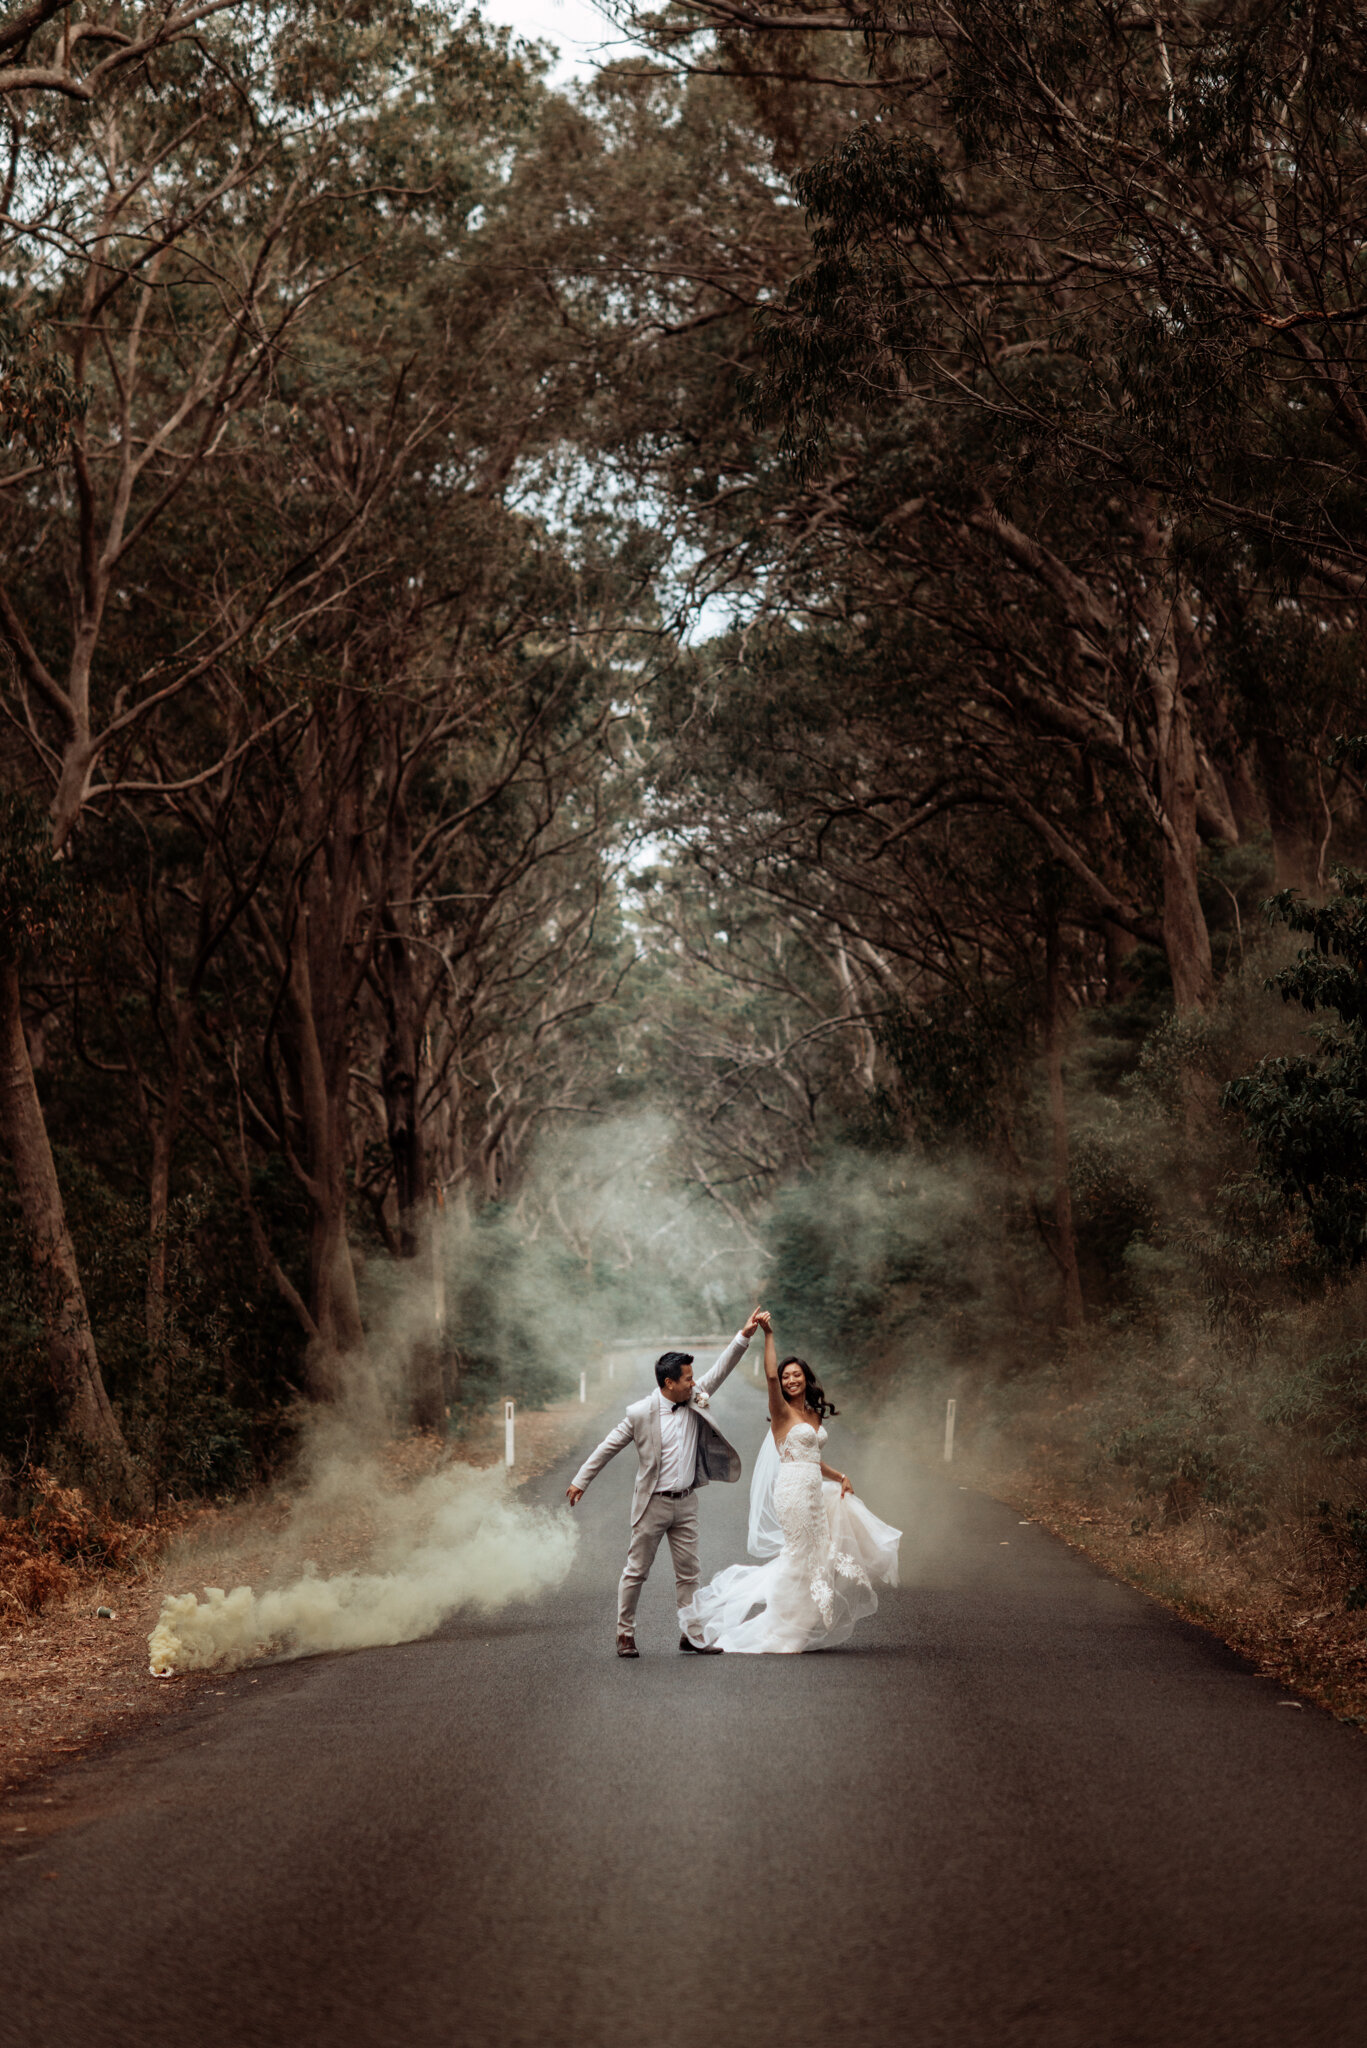 Lovelenscapes • Brisbane + Berlin Wedding Photographer • Milton Park Country Guesthouse